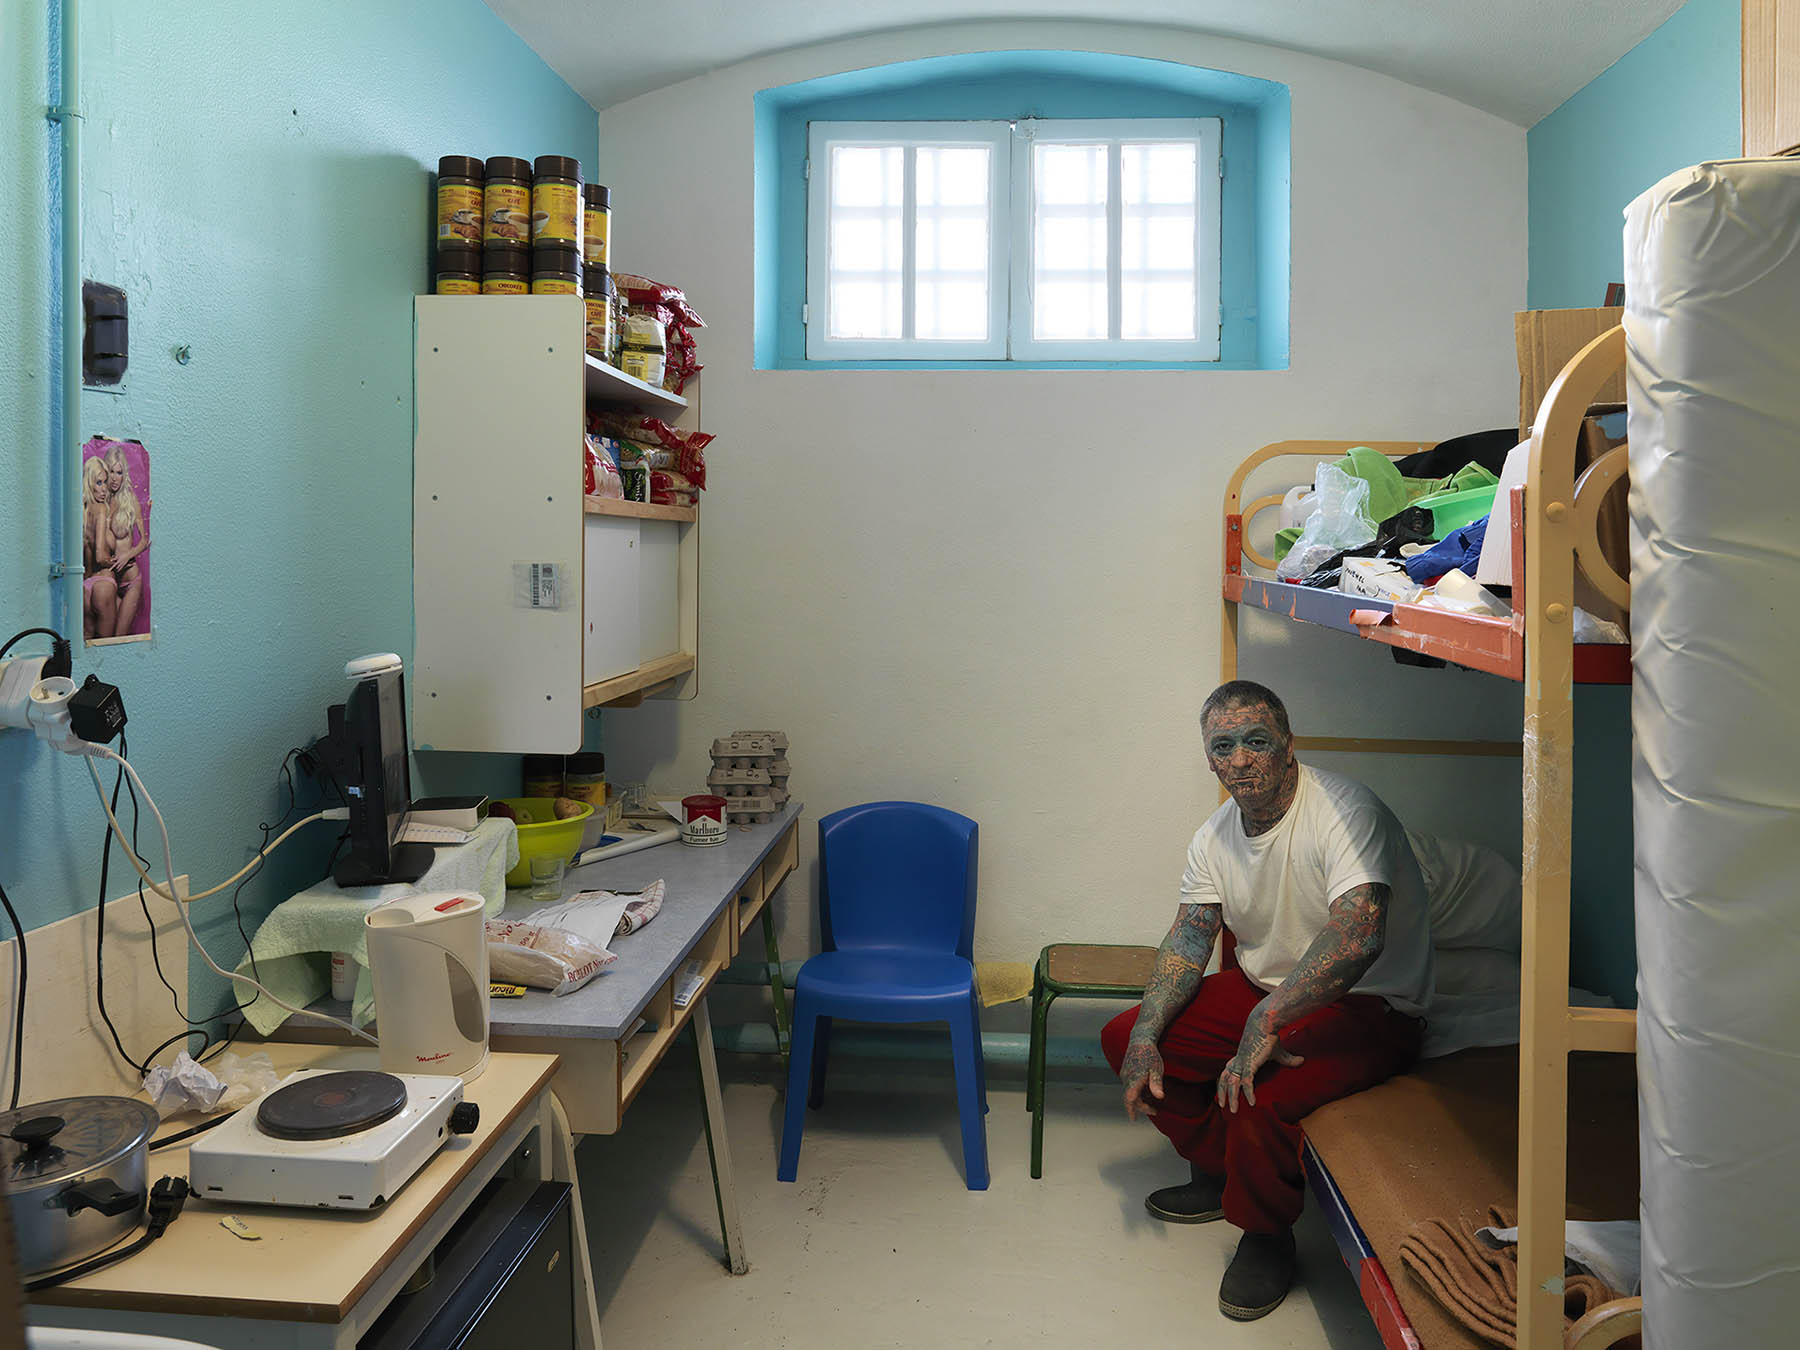 France, Oct. 2013. A prisoner in his cell in the Maison d'arrêt de Bois-d'Arcy.Frankrijk, okt. 2013. Een gevangene in zijn cel in de Maison d’arrêt de Bois-d’Arcy.